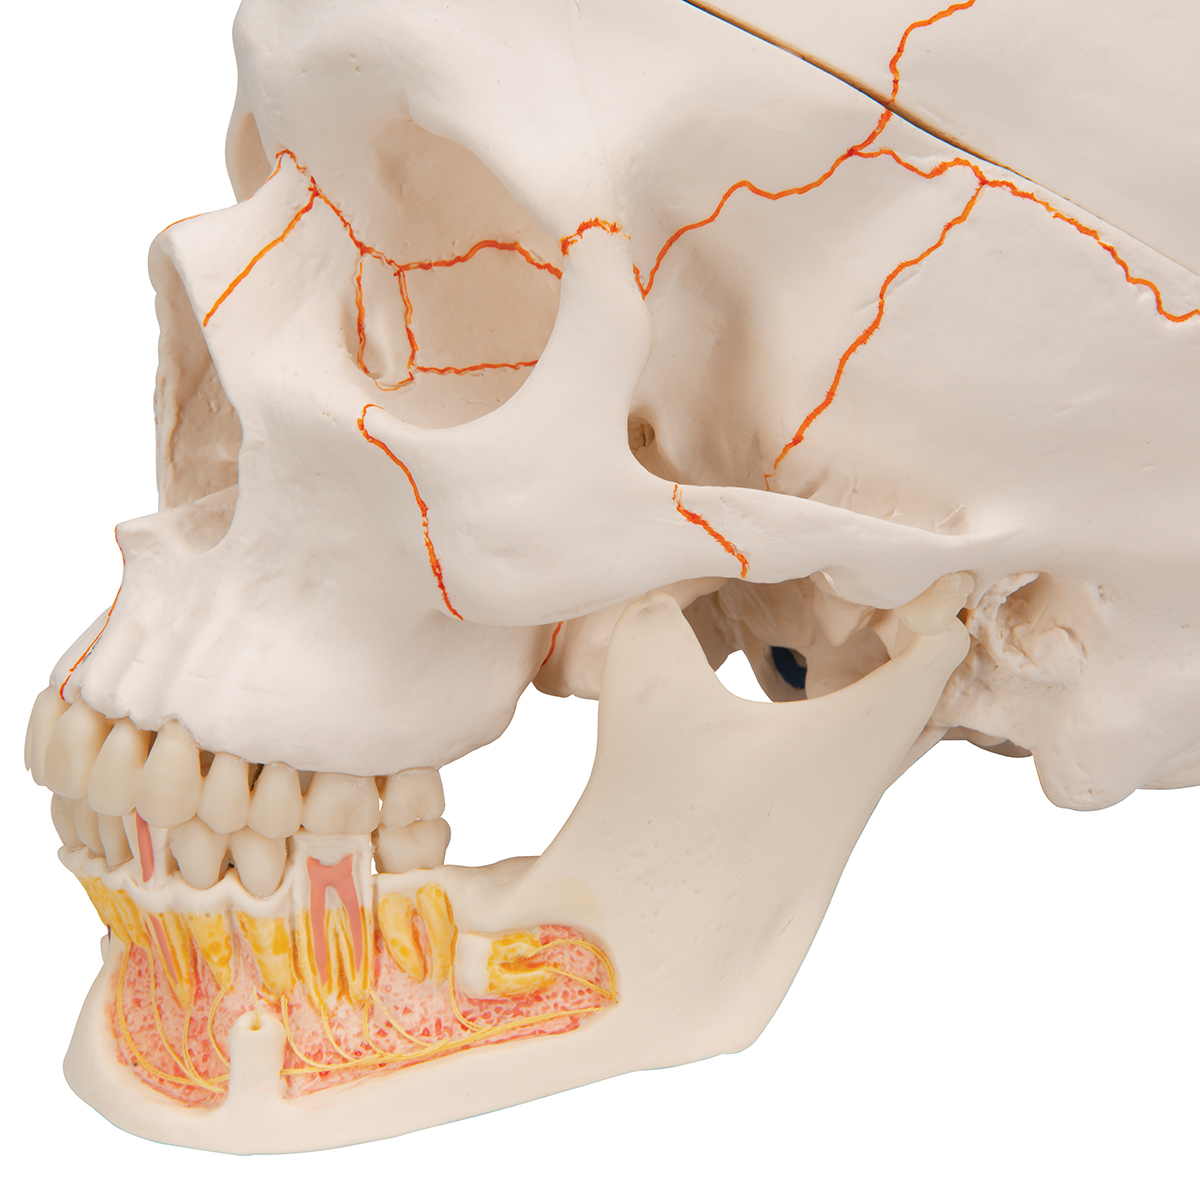 Human Jaw Anatomy - Anatomy Drawing Diagram